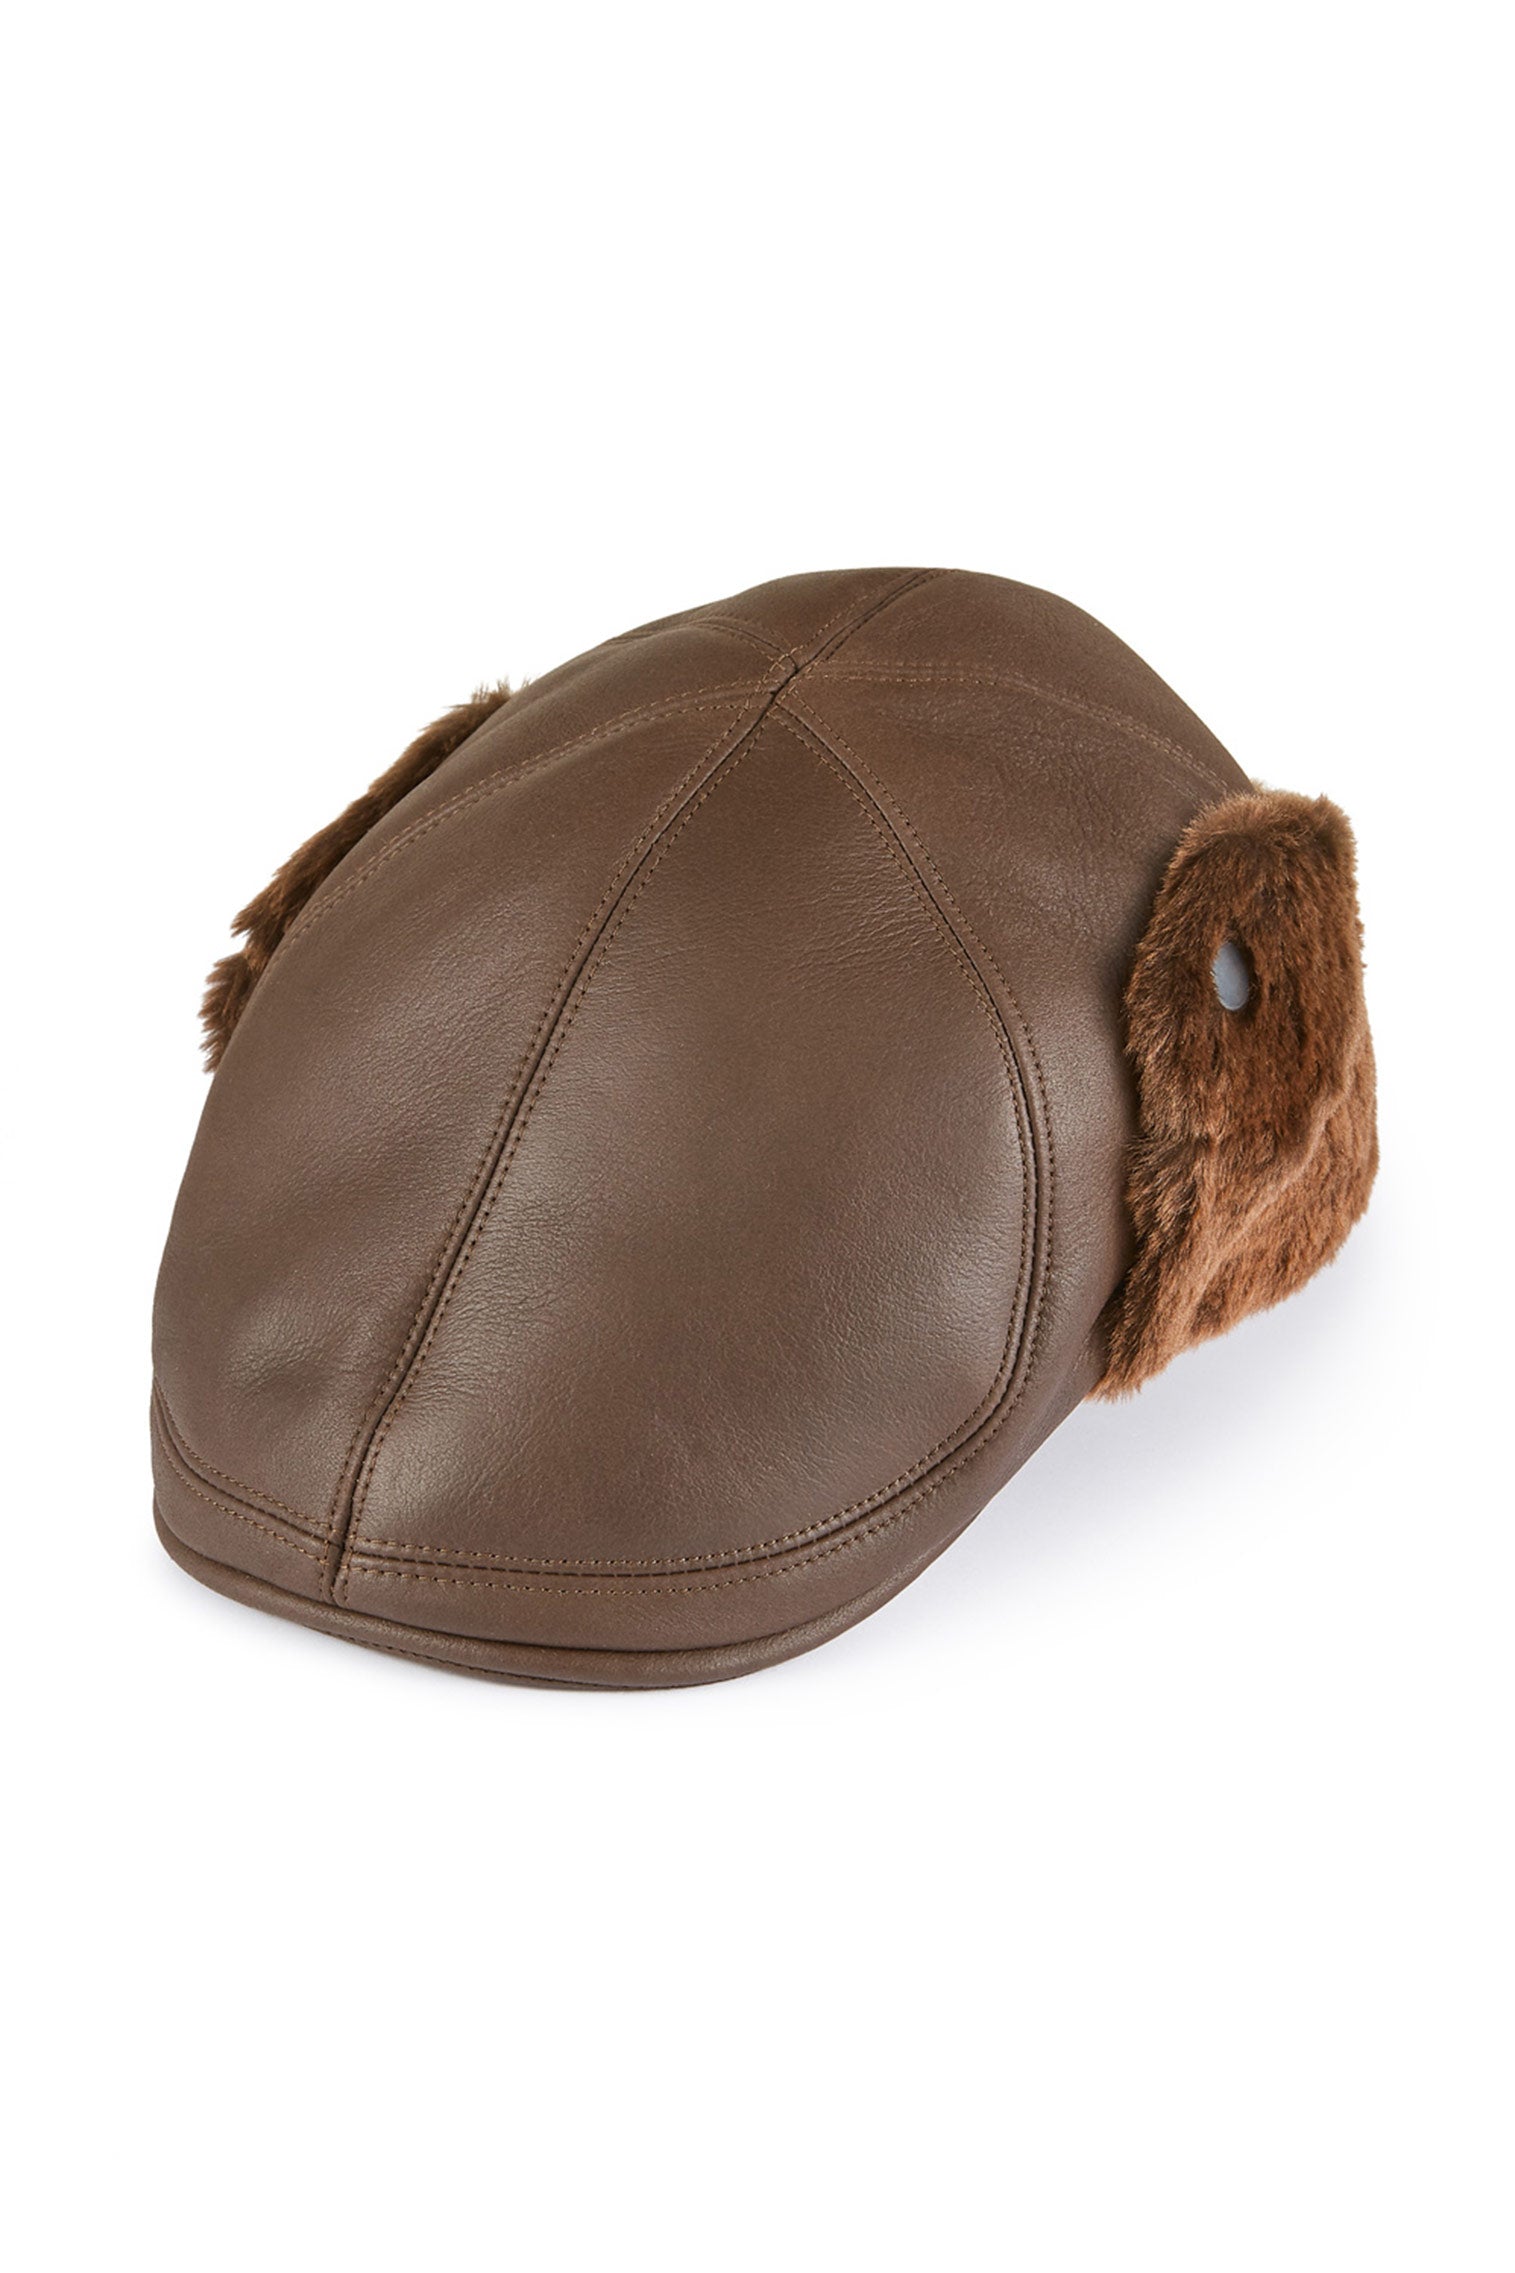 Alberta Leather Flat Cap - Hats with Ear Flaps - Lock & Co. Hatters London UK